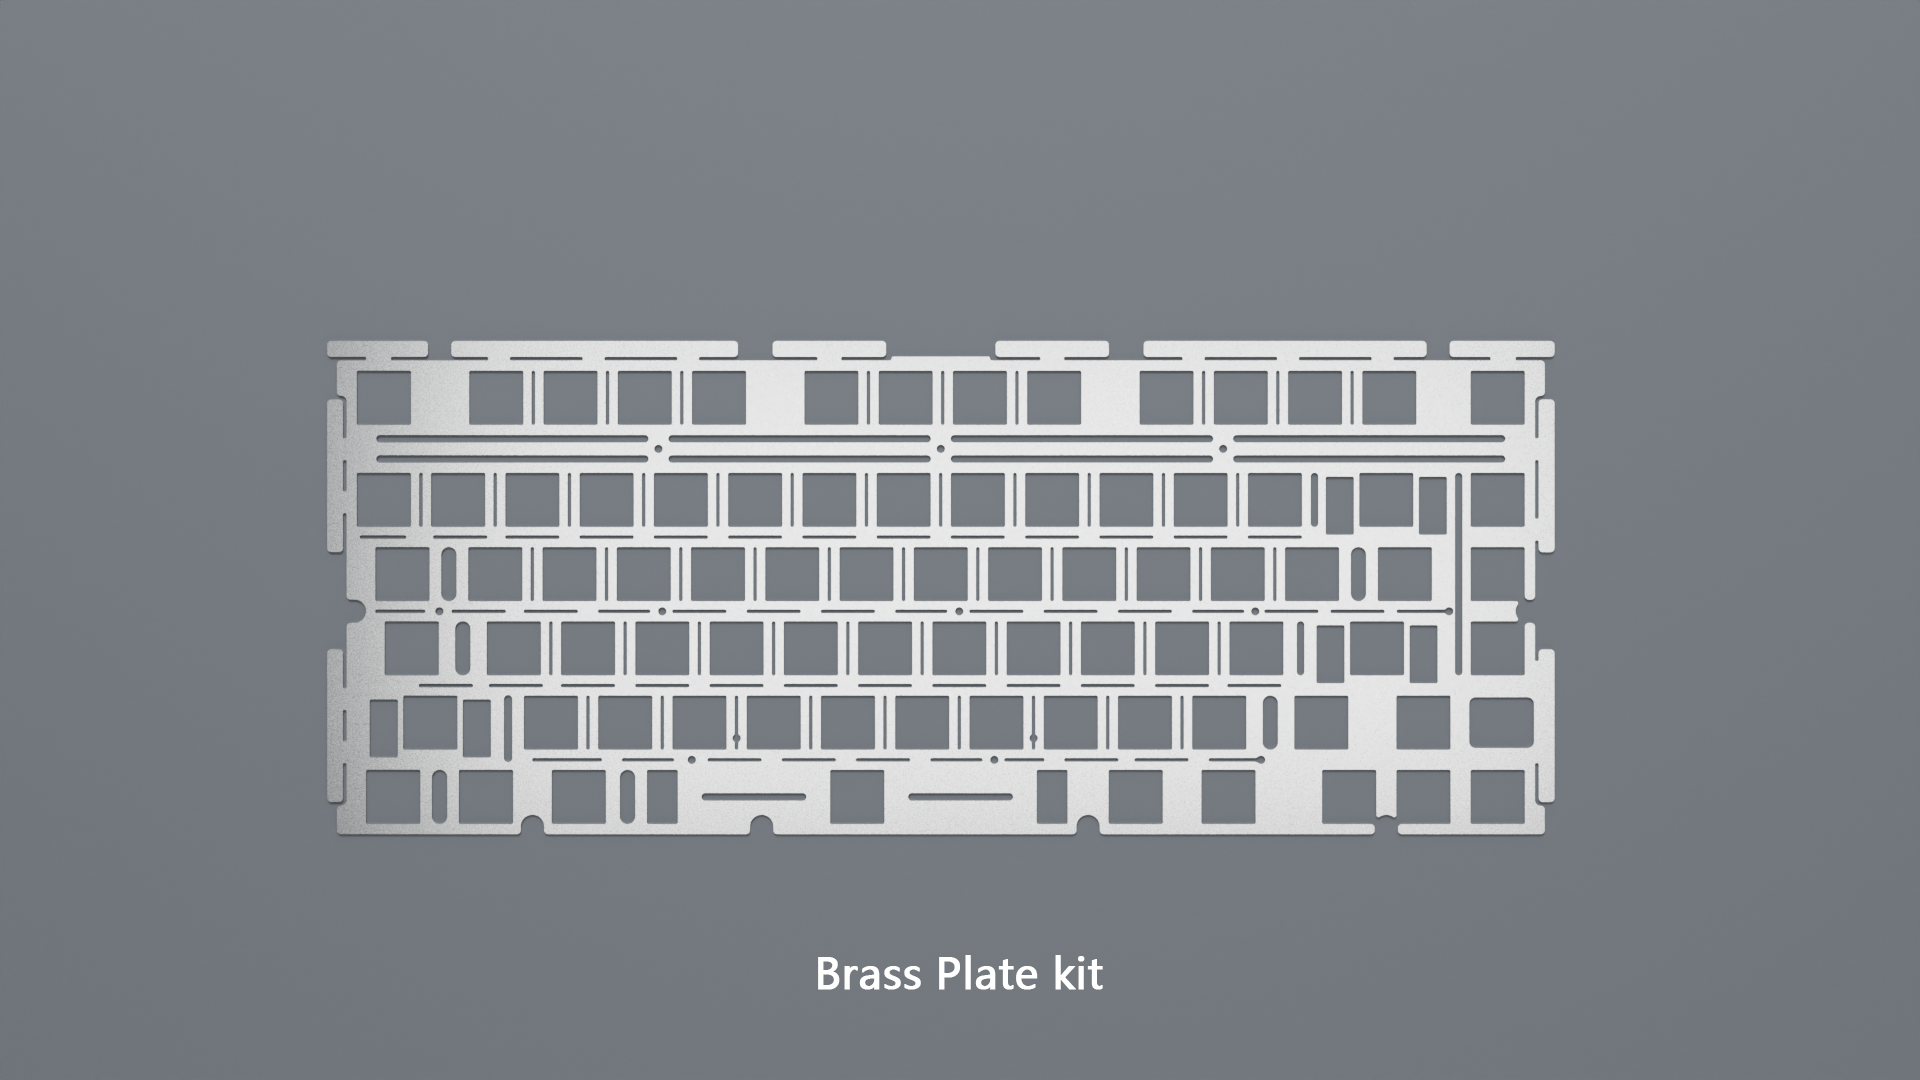 Hope 75S Mechanical Keyboard - Addons & Accessories